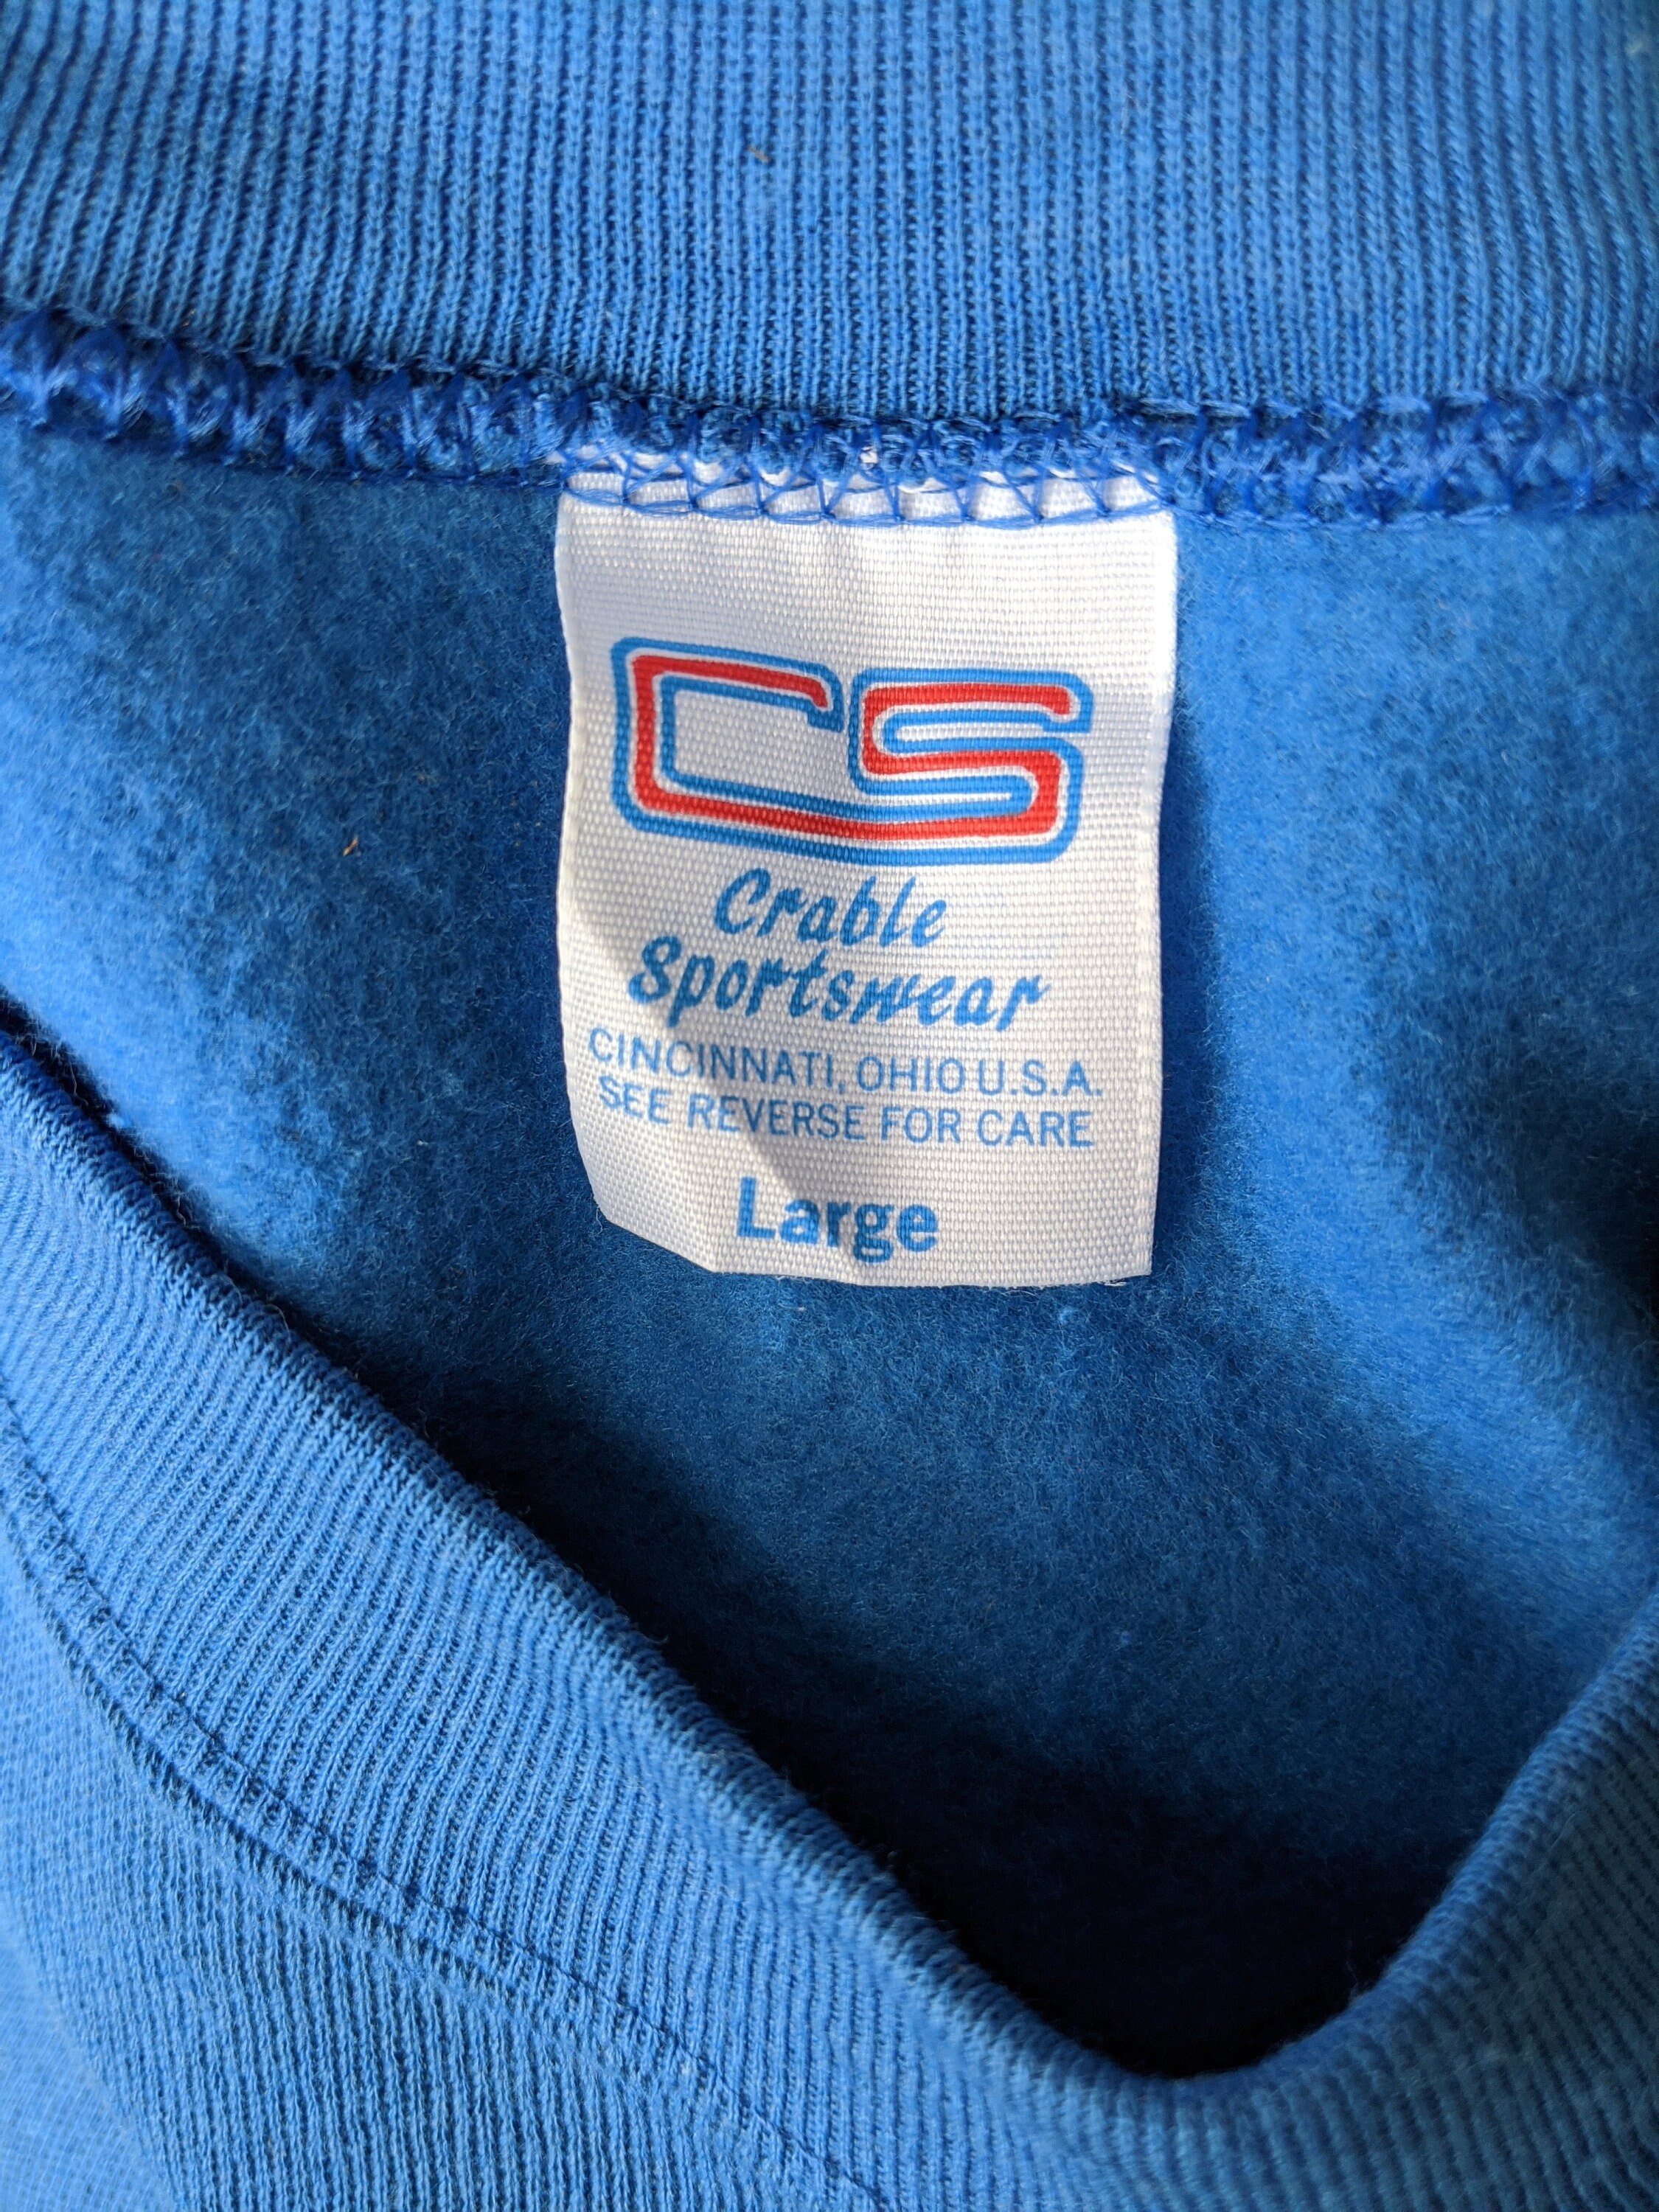 80s Vintage Deadstock University of Connecticut Sweatshirt / | Etsy